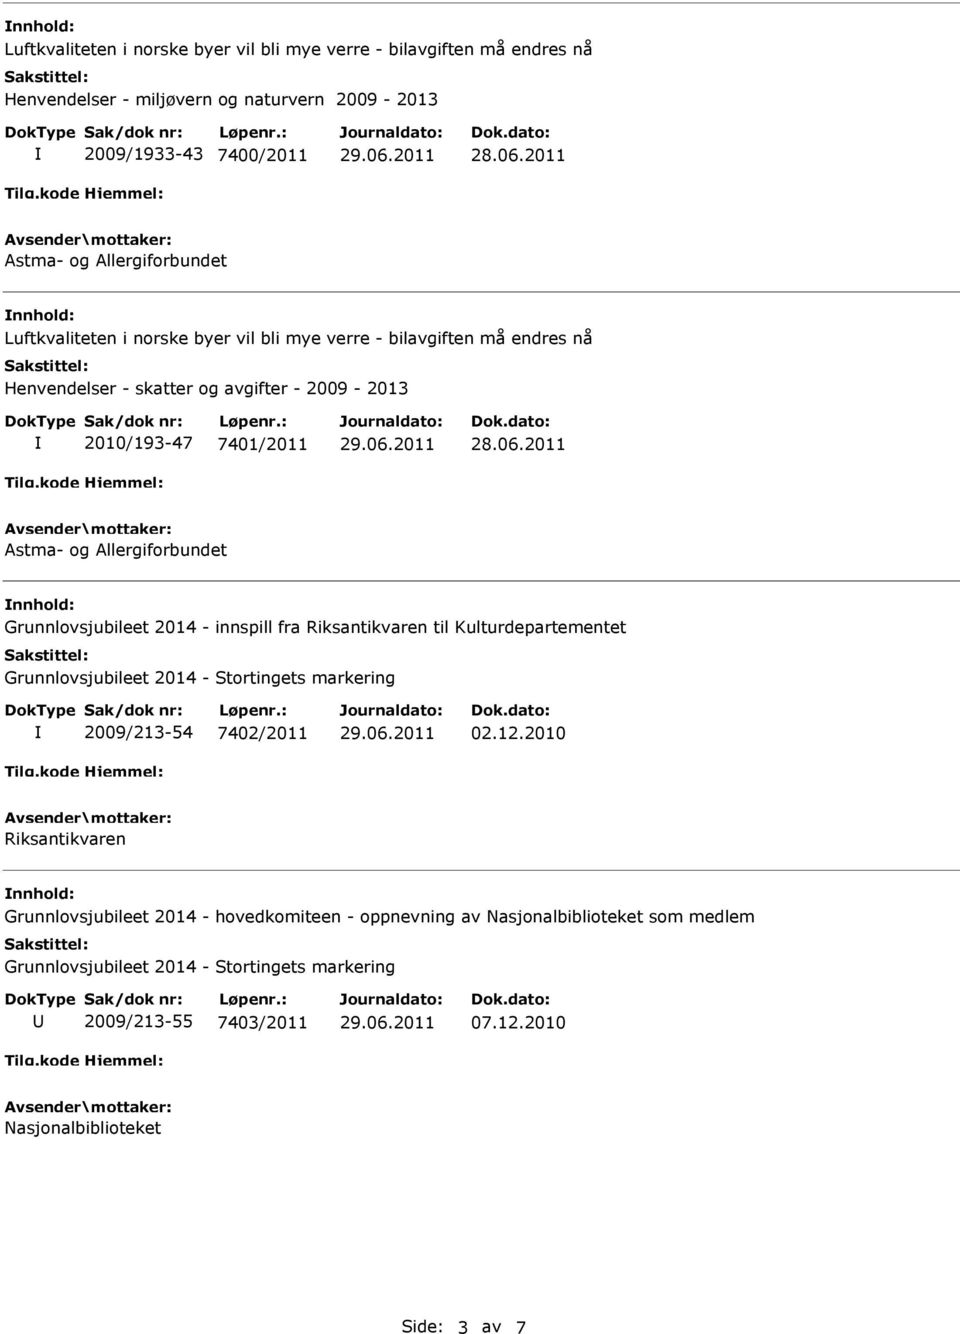 Stortingets markering 2009/213-54 7402/2011 02.12.